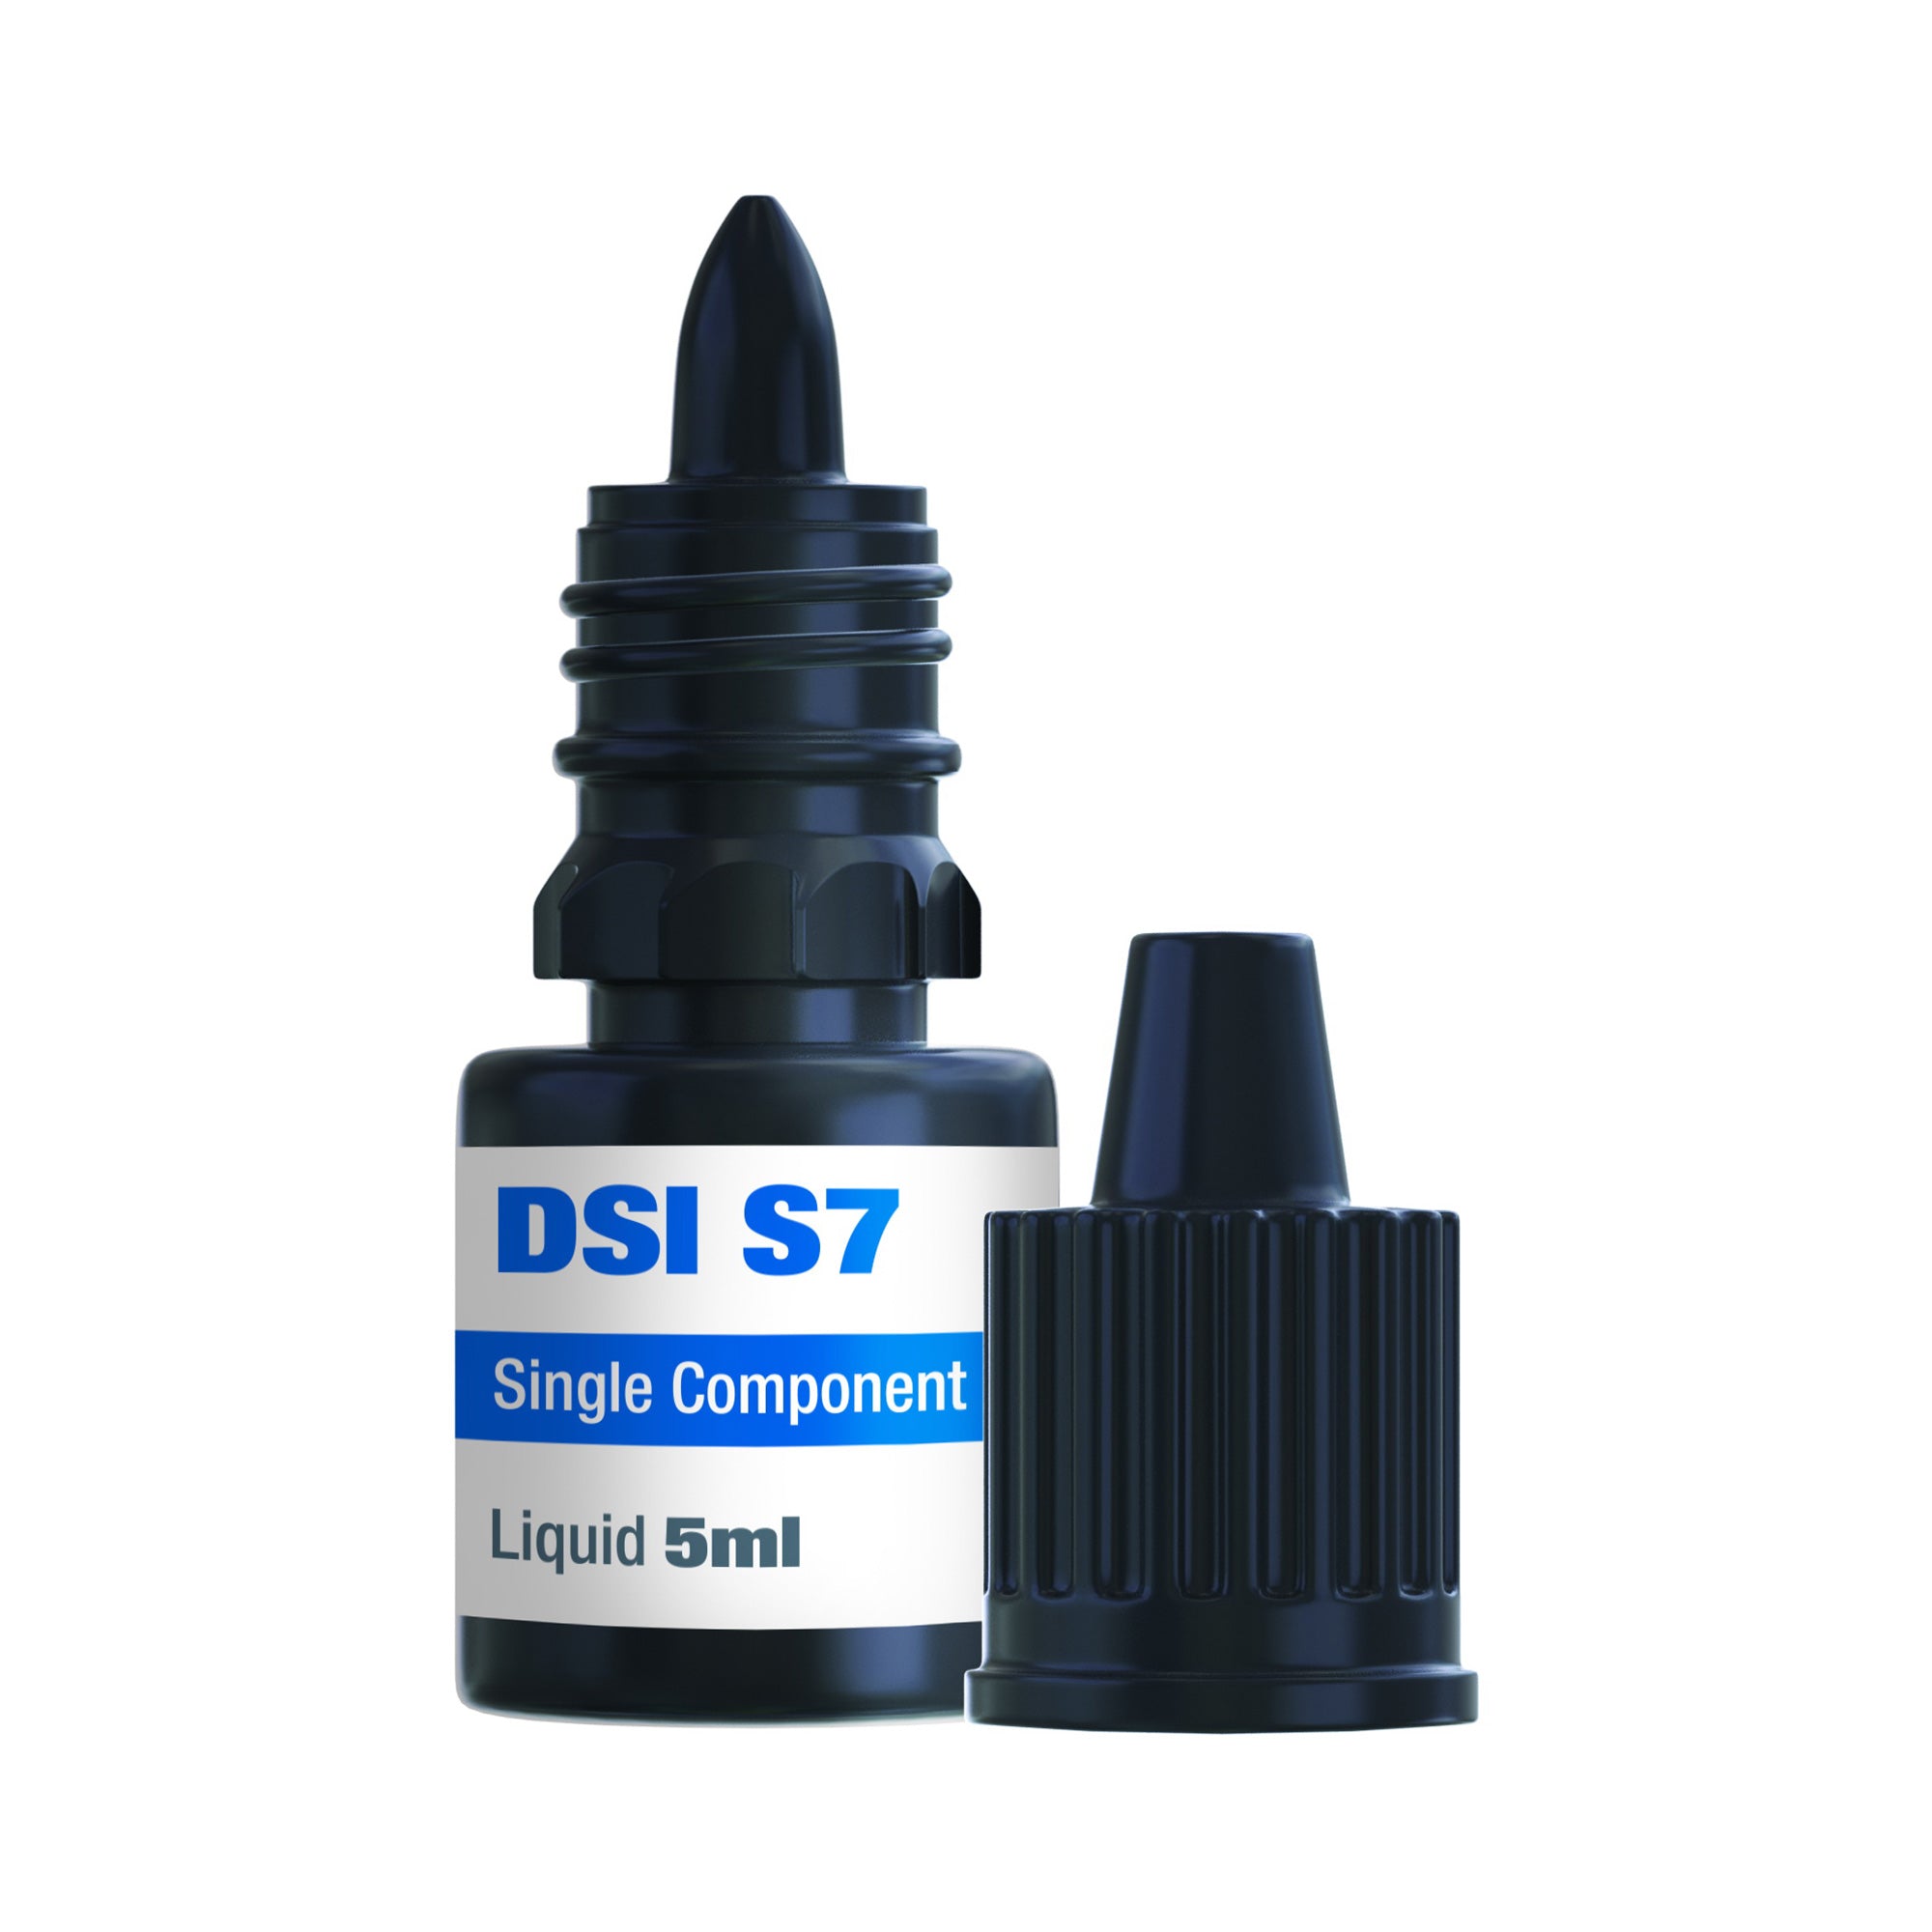 DSI S7 Bonding Single Component Self-Etch Adhesive 5ml